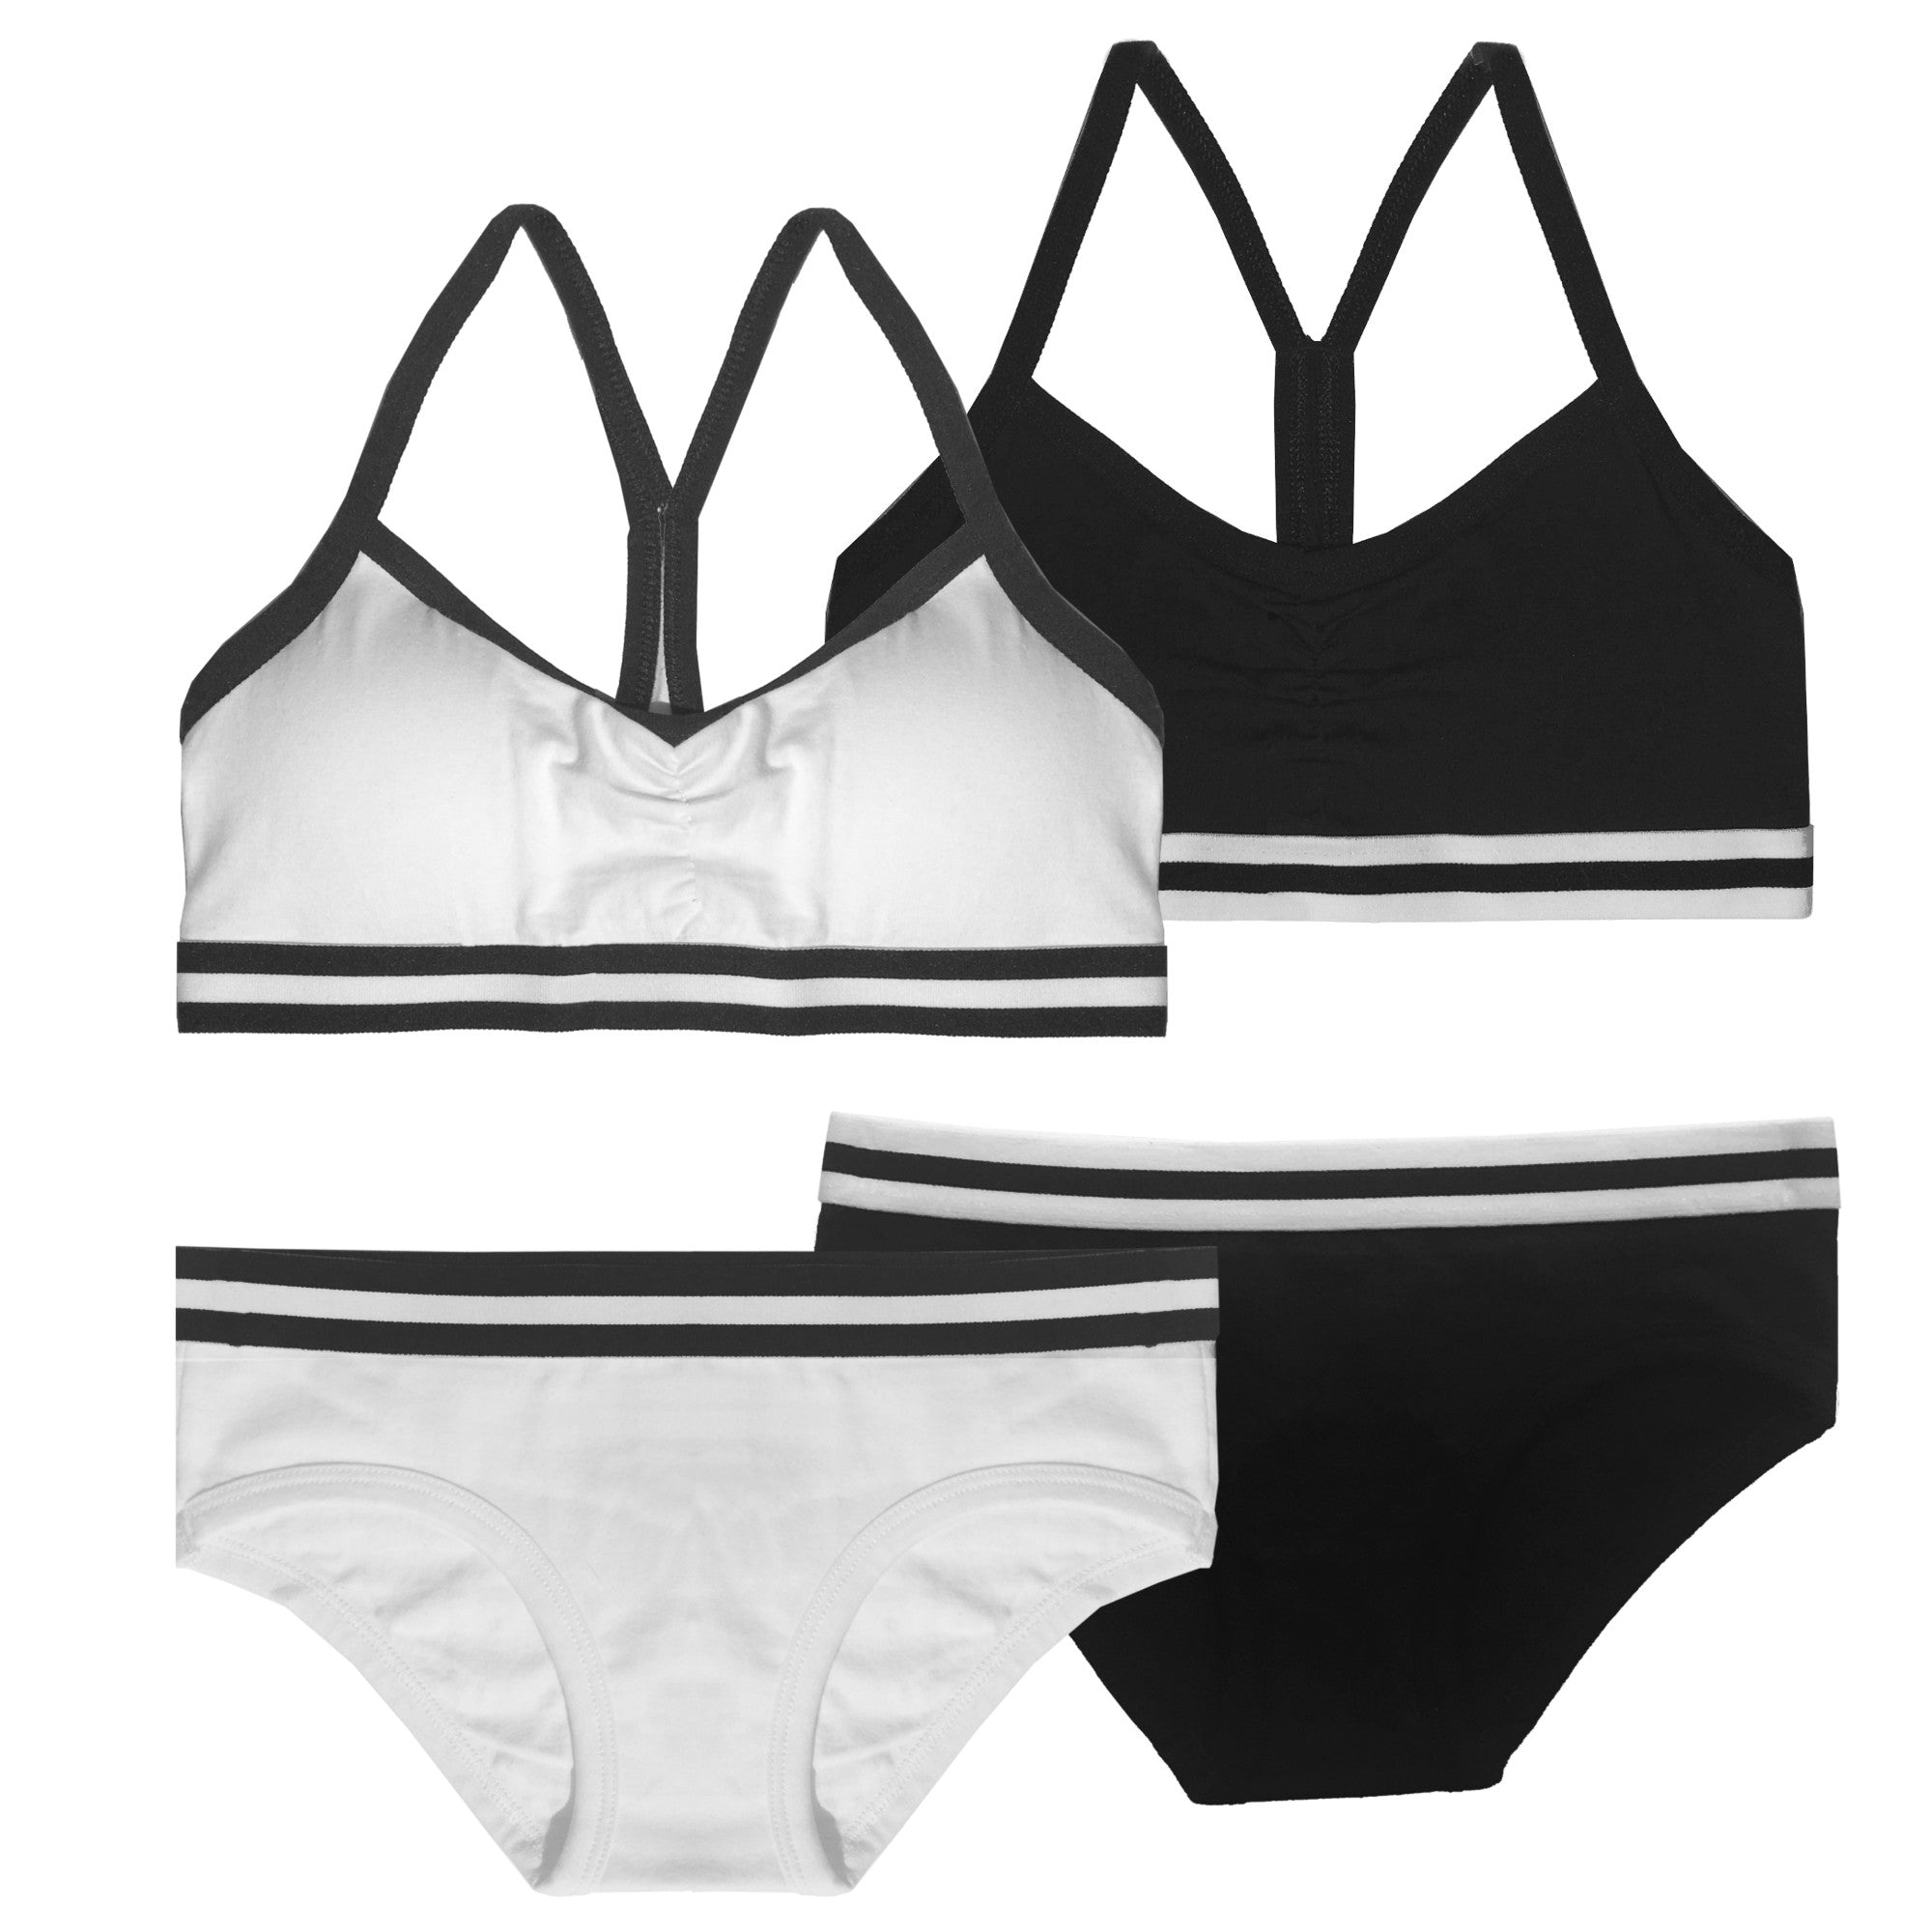 Popular Girls Matching Cotton Racerback Bra and Underwear Sets (2 sets)